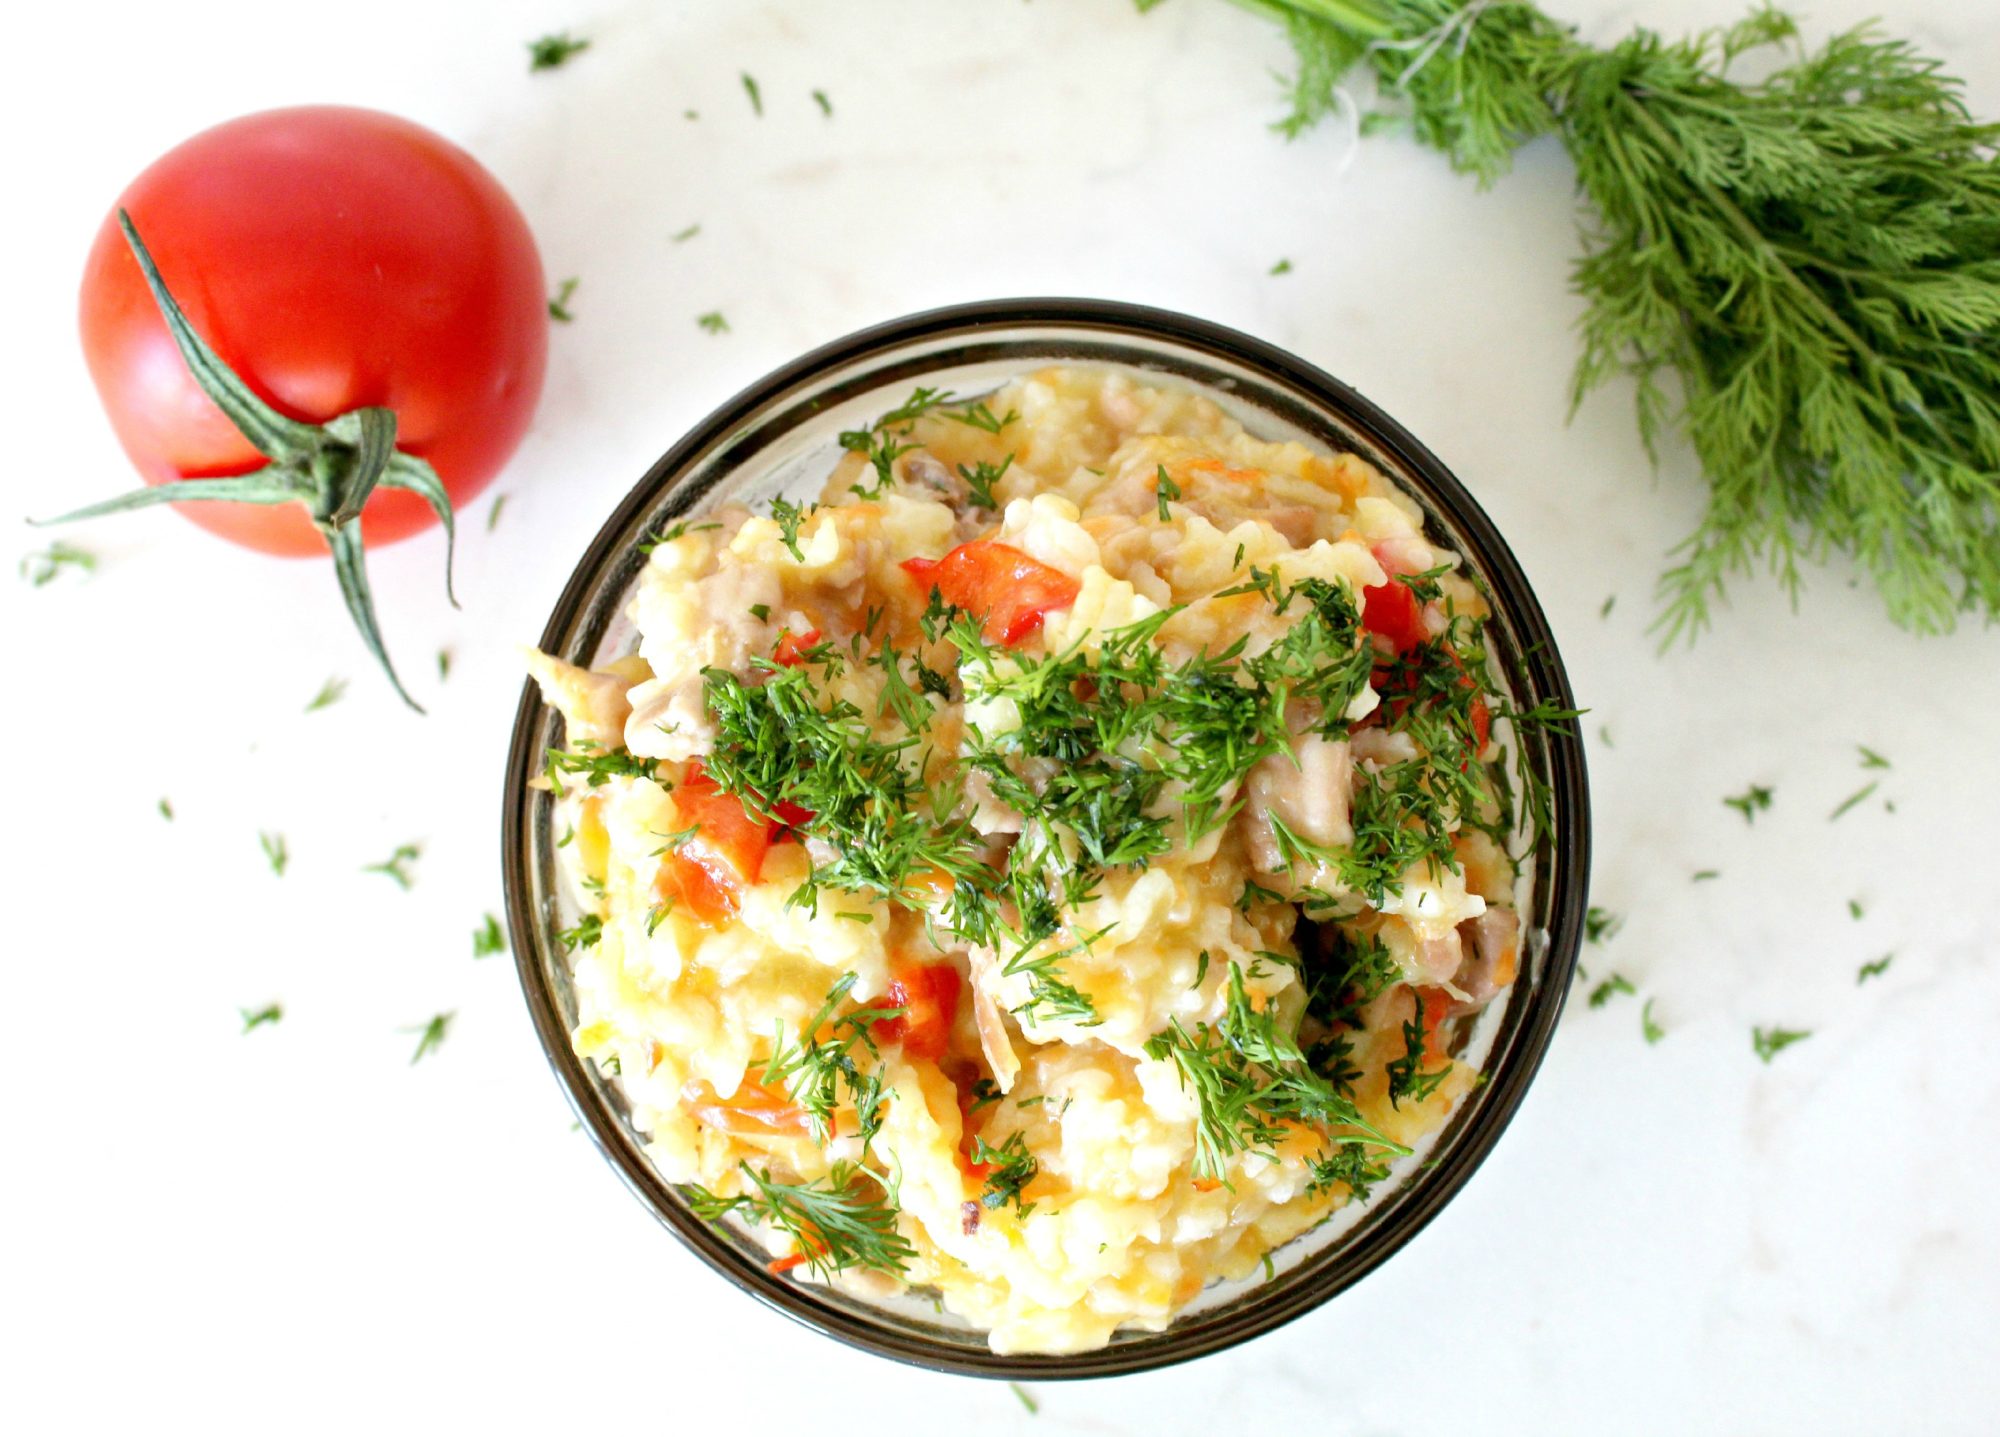 Chicken rice pilaf recipe